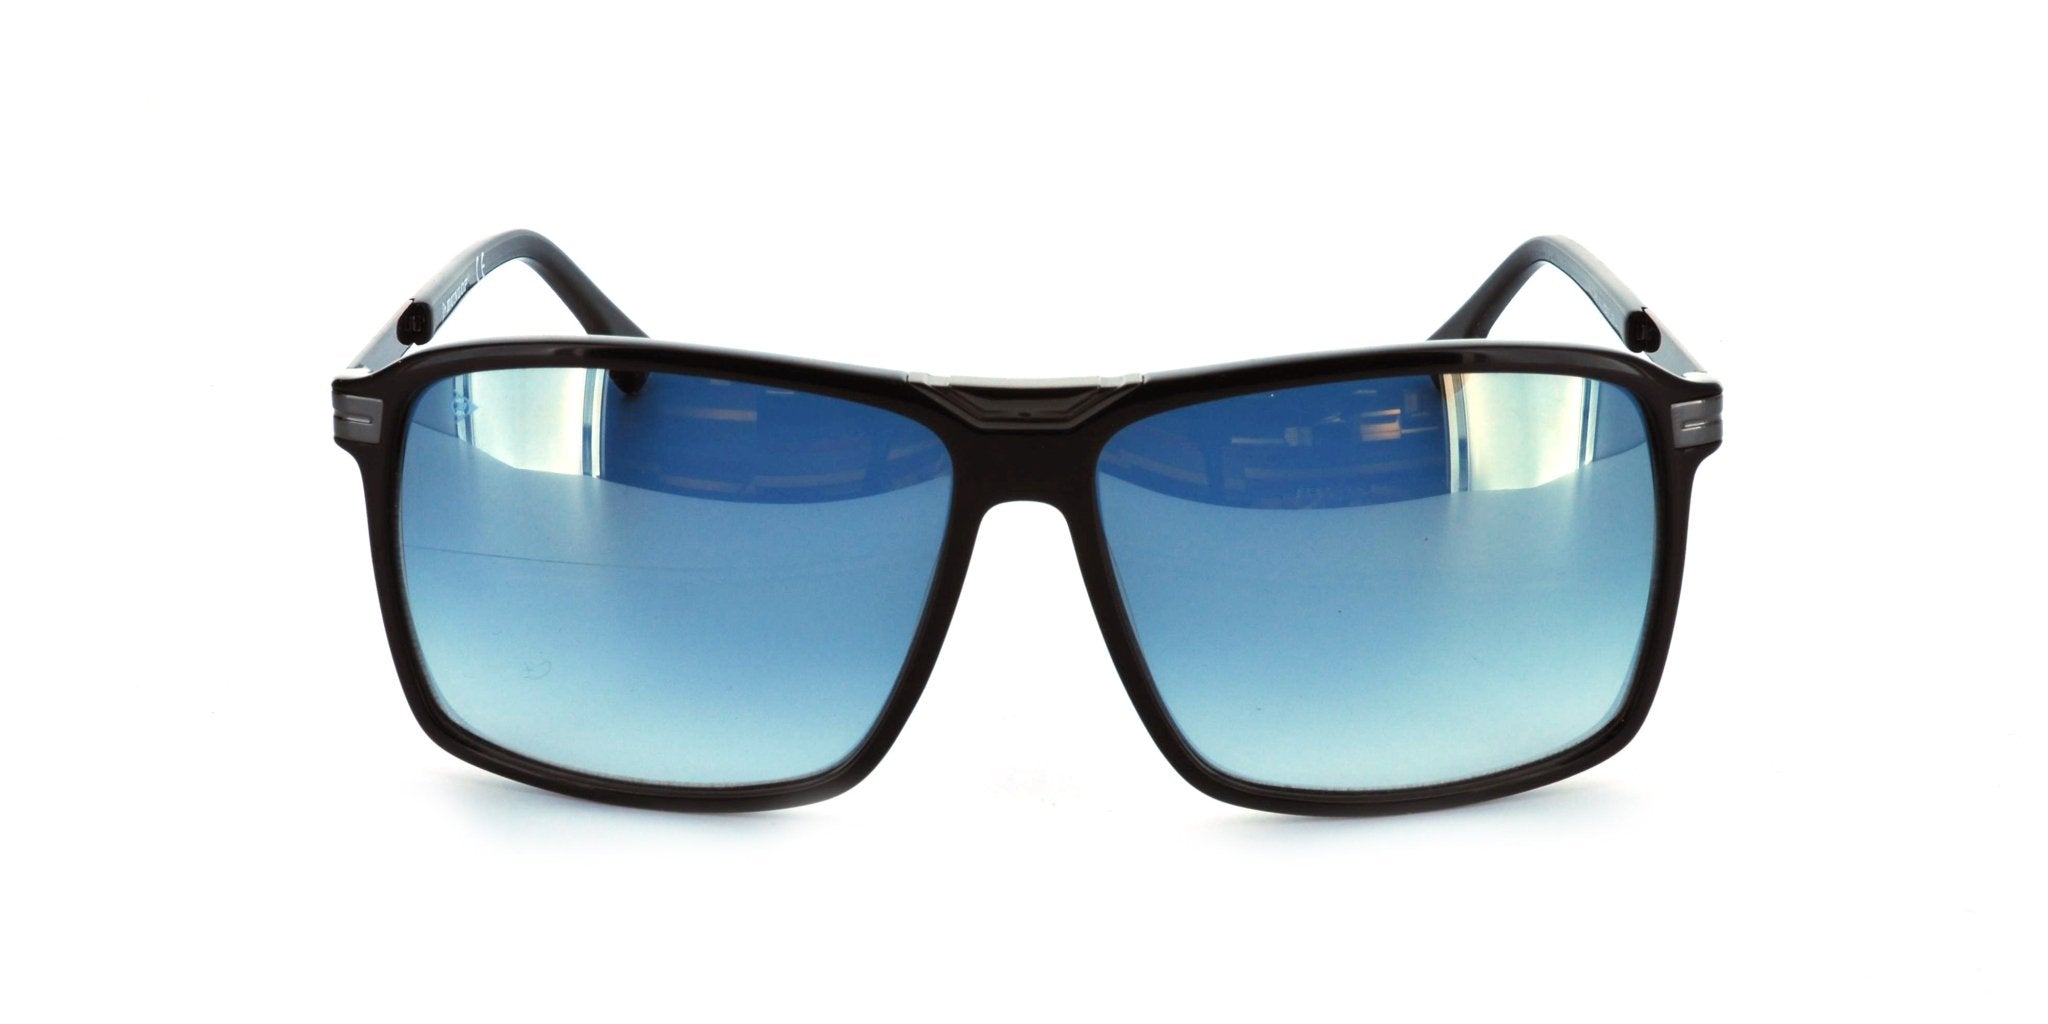 Takreem Dunlop DG-3498-C2 Men's Sunglasses - A Blend of Style and Protection - #shoTakreem Dunlop DG-3498-C2 Men's Sunglasses - A Blend of Style and Protectionp_name#Takreem Dunlop DG-3498-C2 Men's Sunglasses - A Blend of Style and ProtectionSunglassesDunlopTakreem.joDG 3498 c2BlueAcetateMenTakreem Dunlop DG-3498-C2 Men's Sunglasses - A Blend of Style and Protection - Takreem.jo